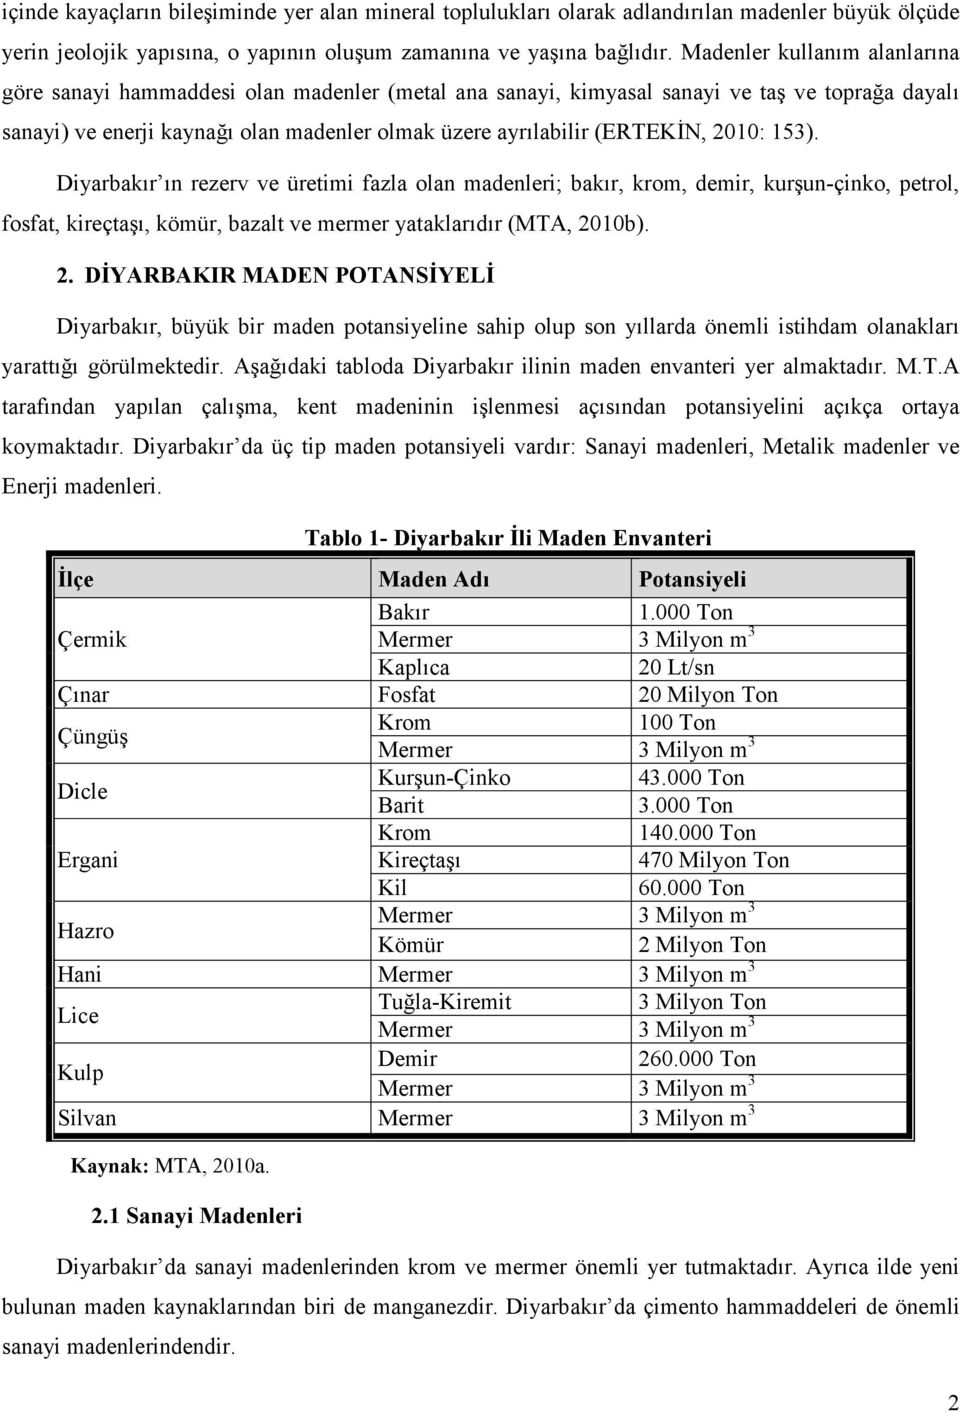 Diyarbakır Maden Sektörü Raporu. Hüseyin AKDOĞAN 1 - PDF Ücretsiz indirin